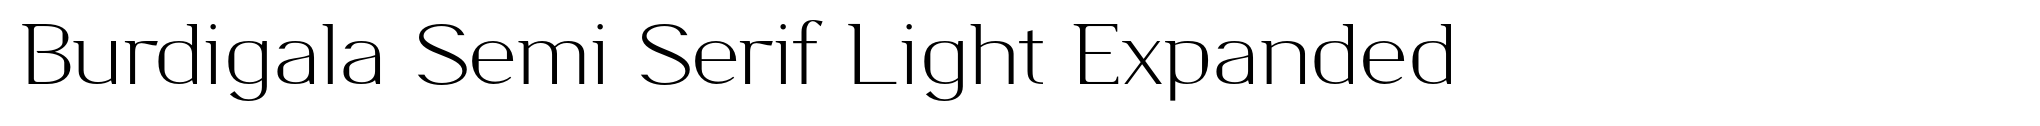 Burdigala Semi Serif Light Expanded image